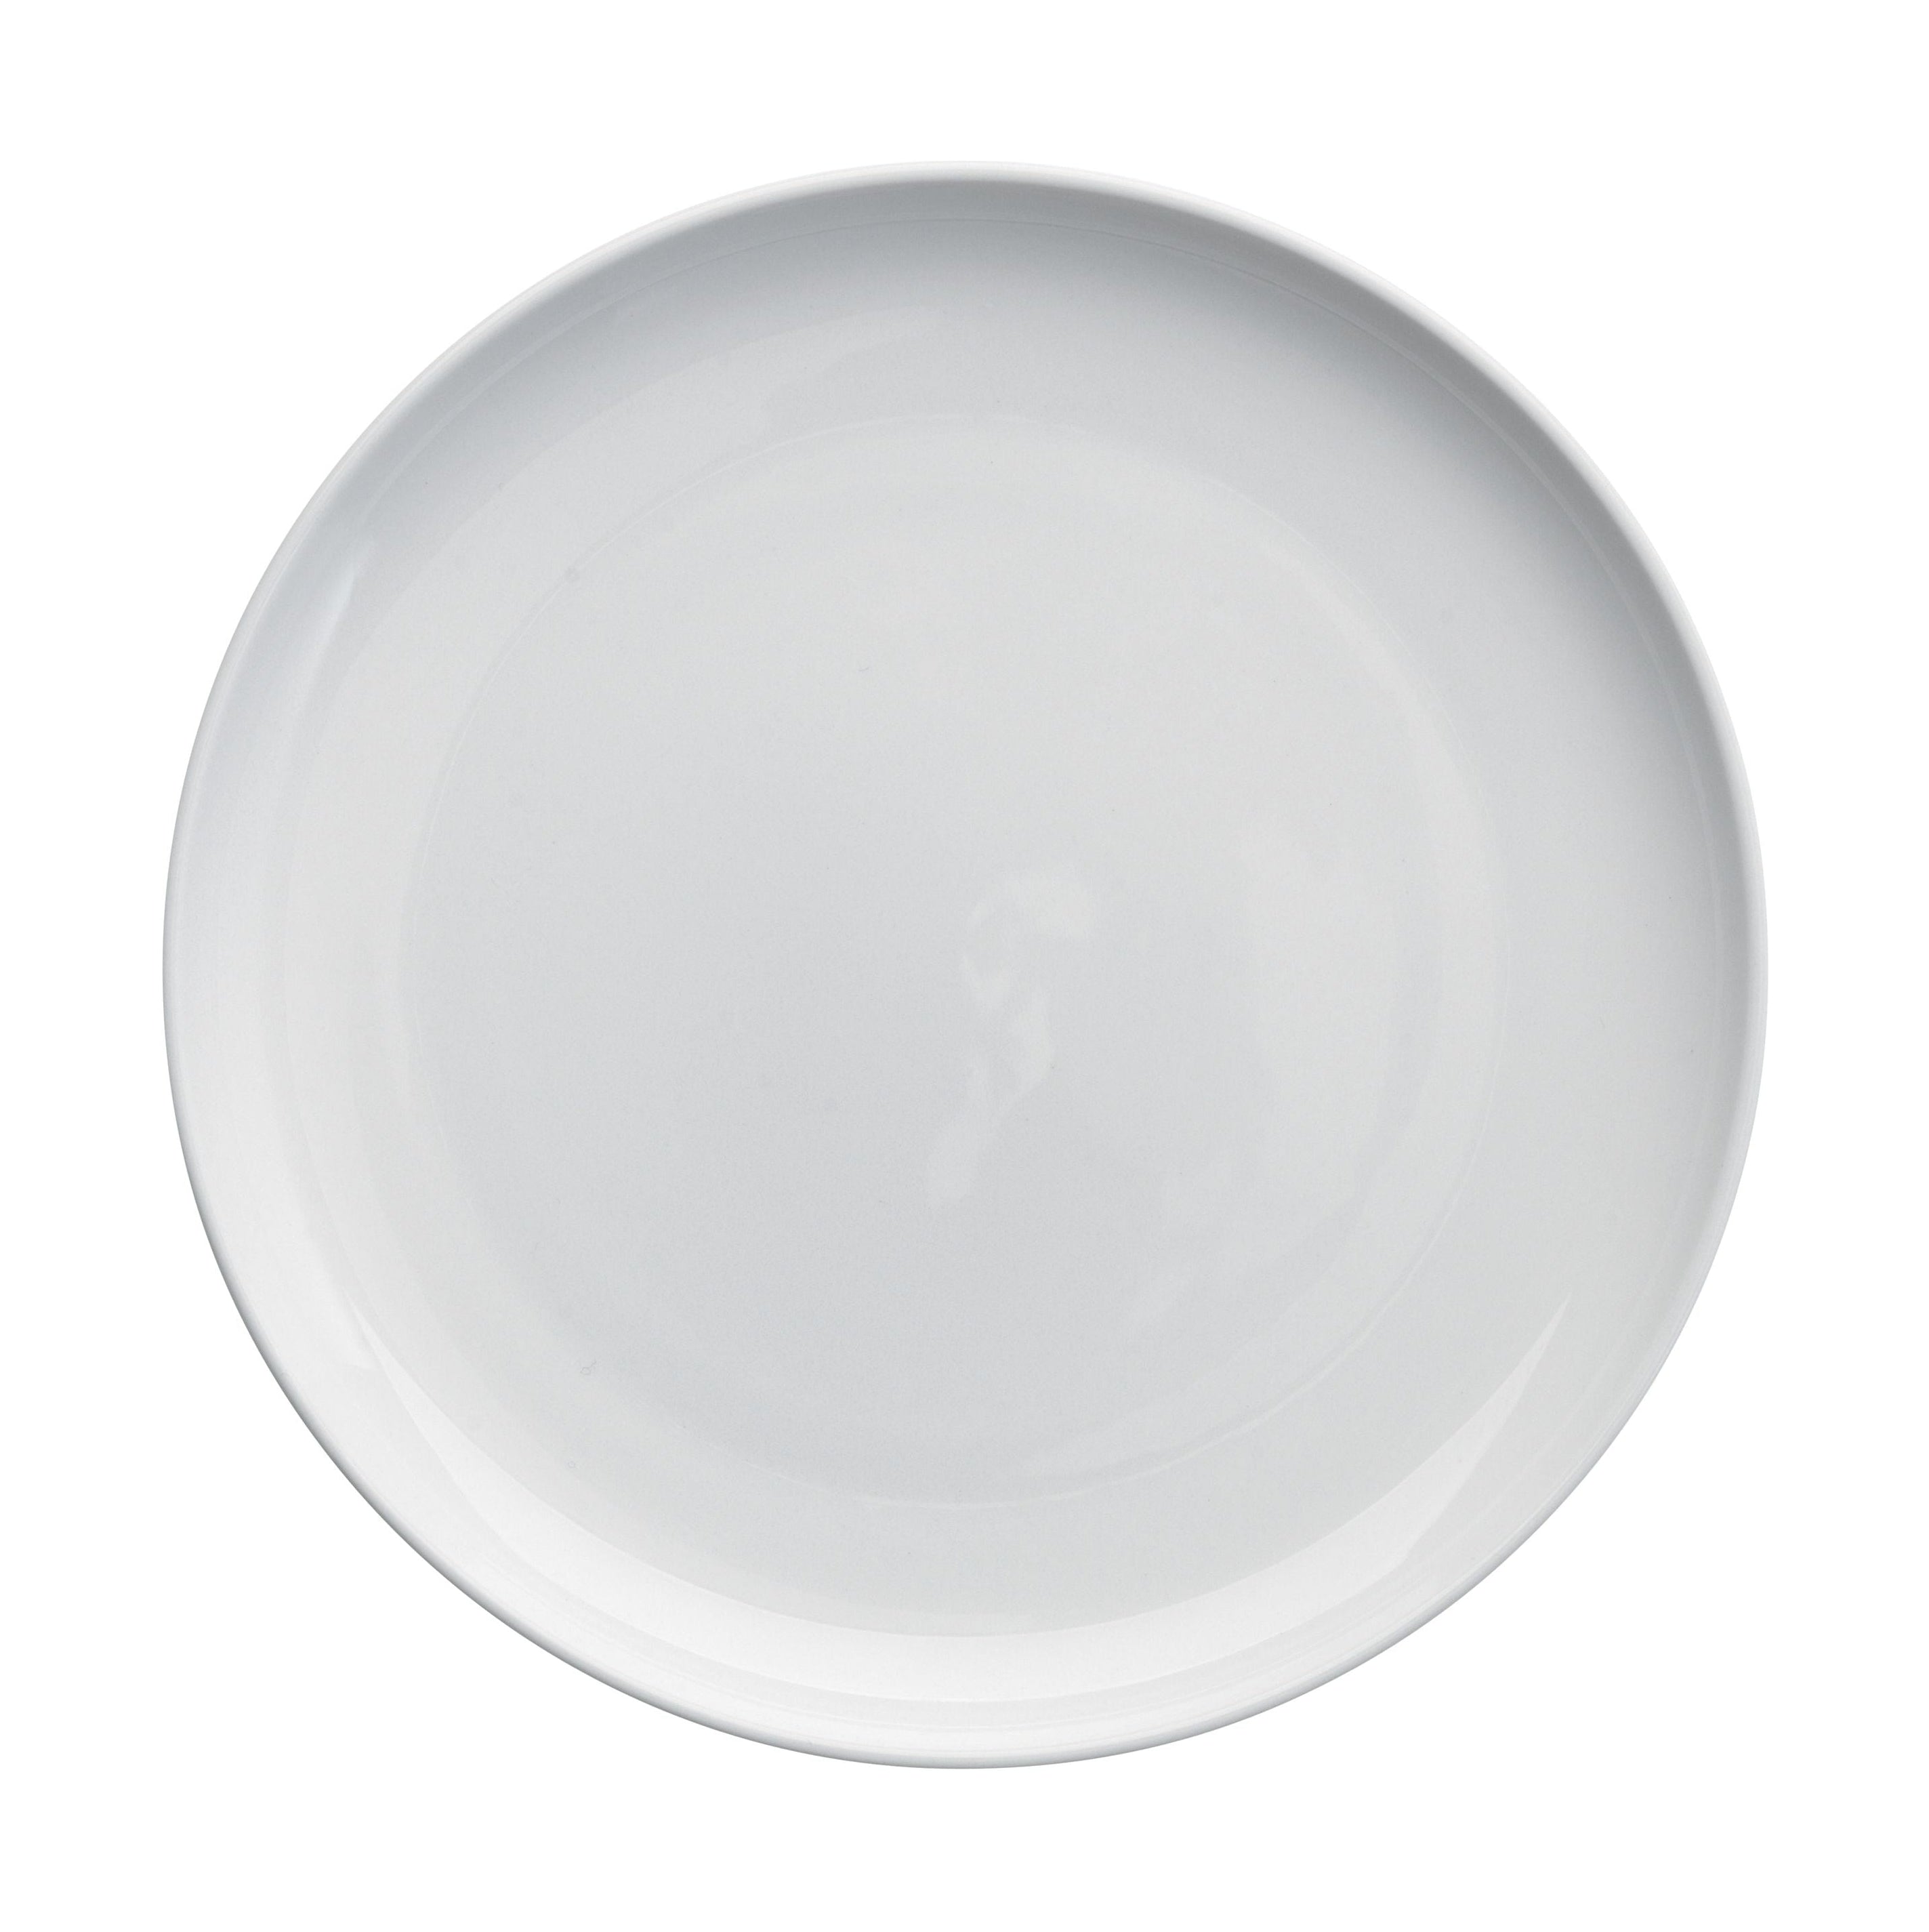 Rörstrand Inswhite Flat Plate, 19 cm